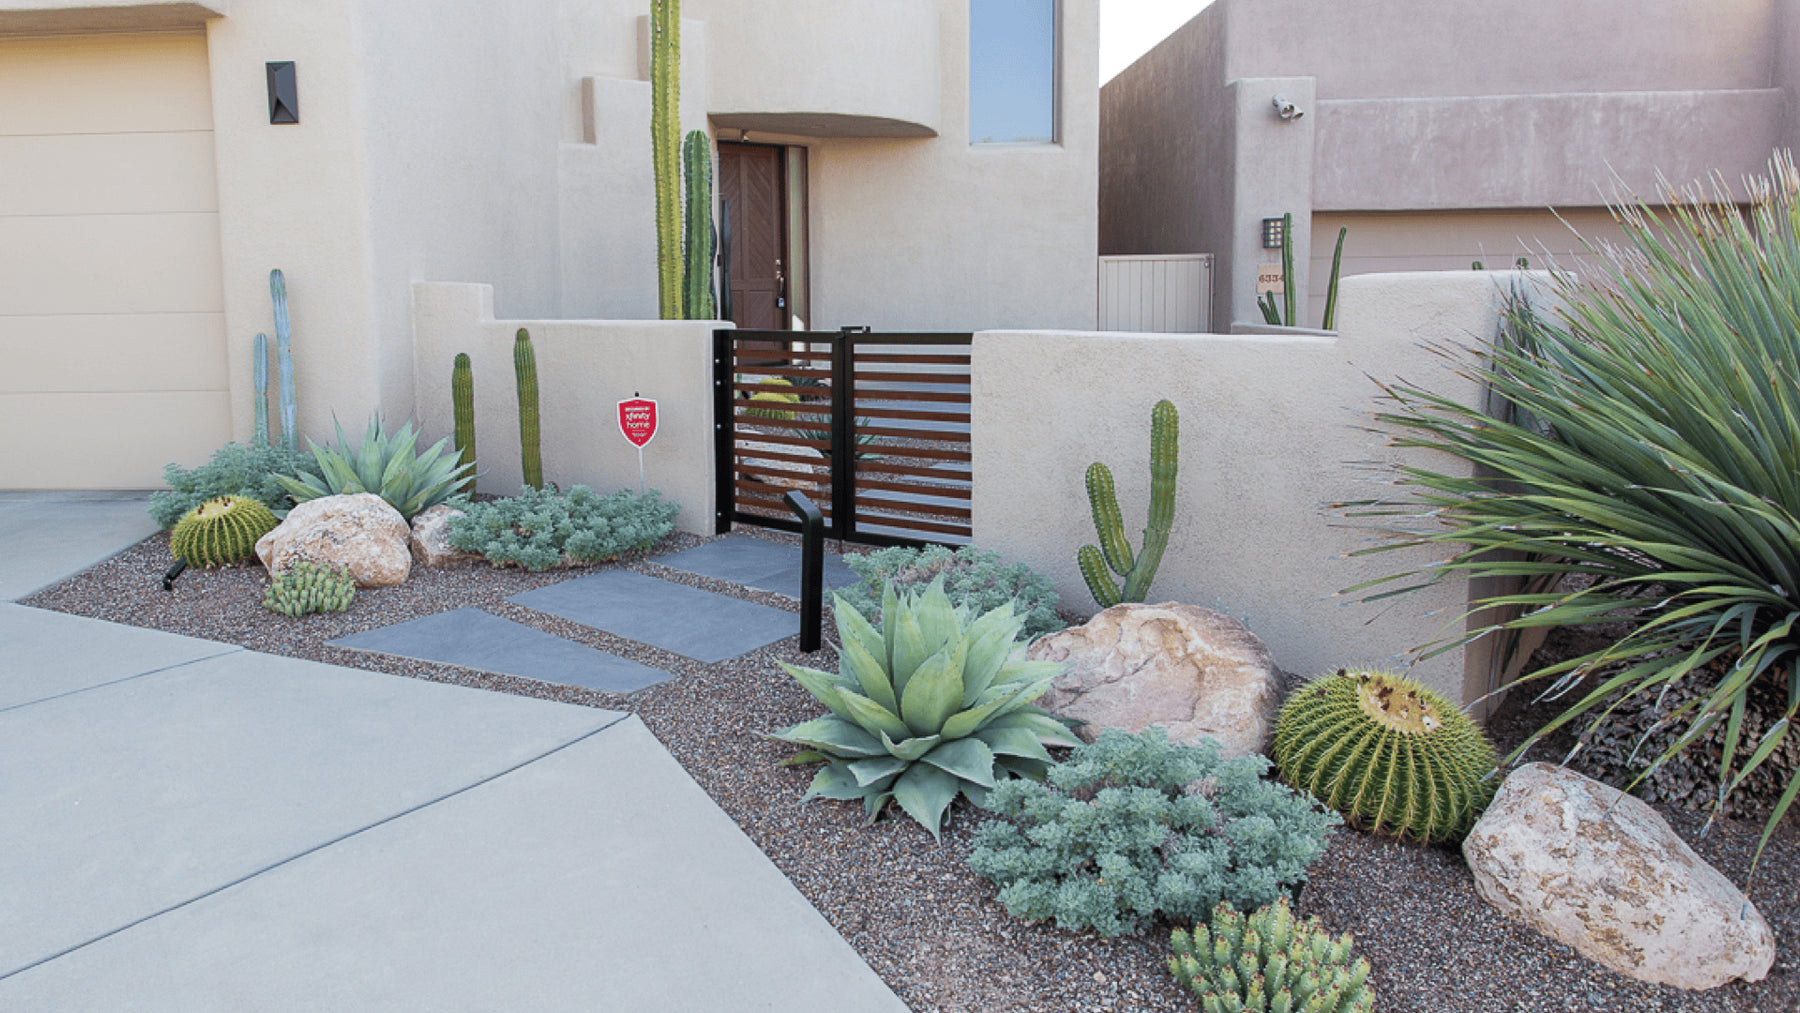 Desert landscaping at the front gate features a subtle pastel color palette.